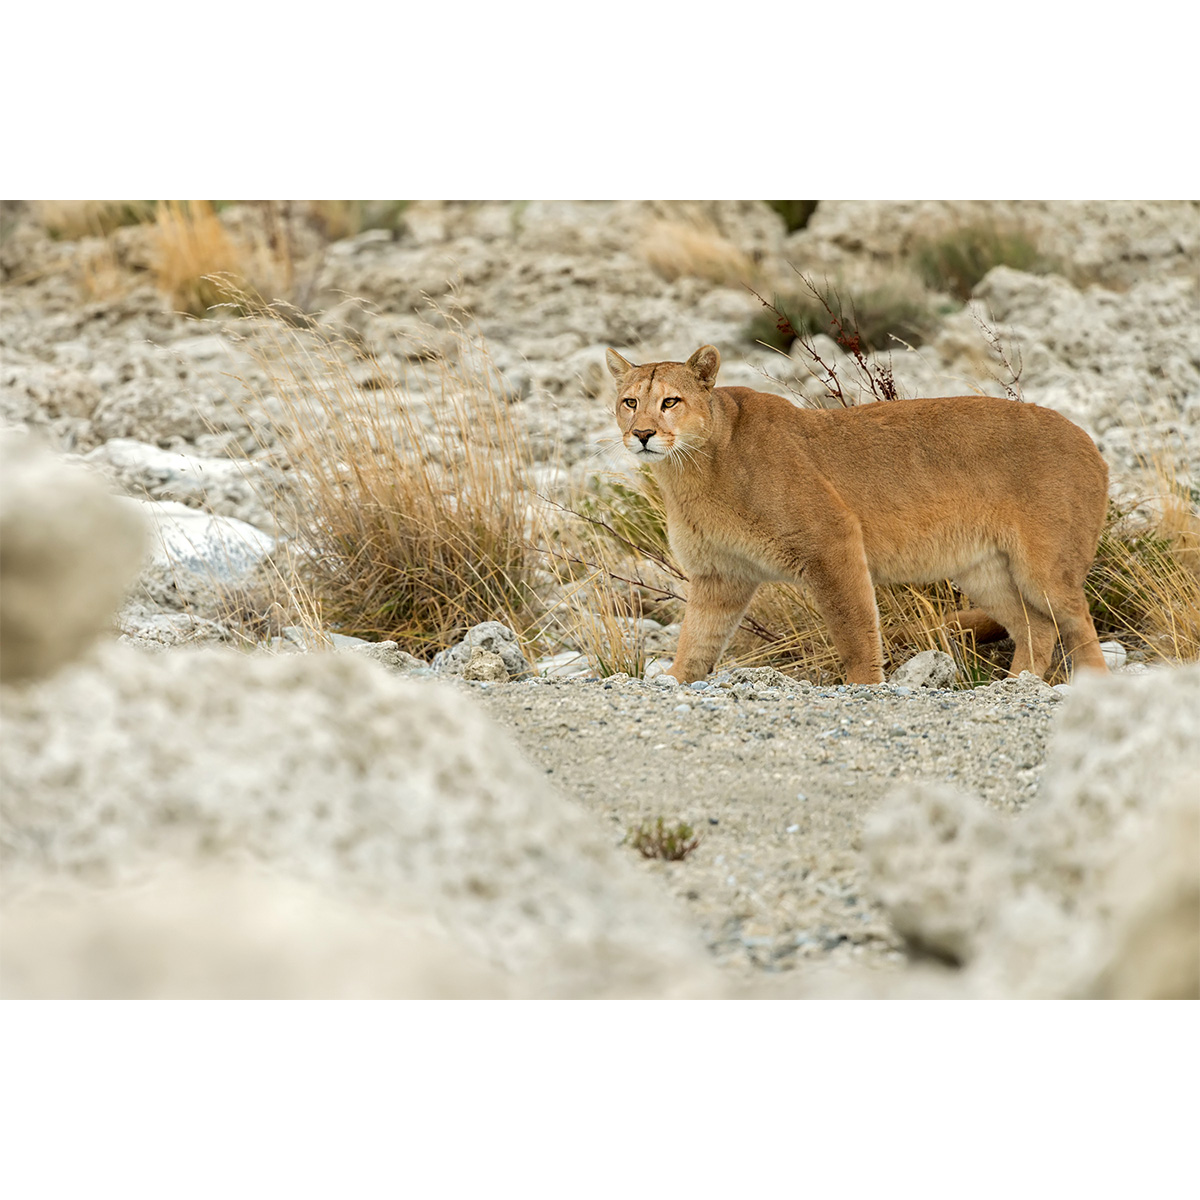 Пума / Горный лев / Кугуар (Puma concolor) Фото №4